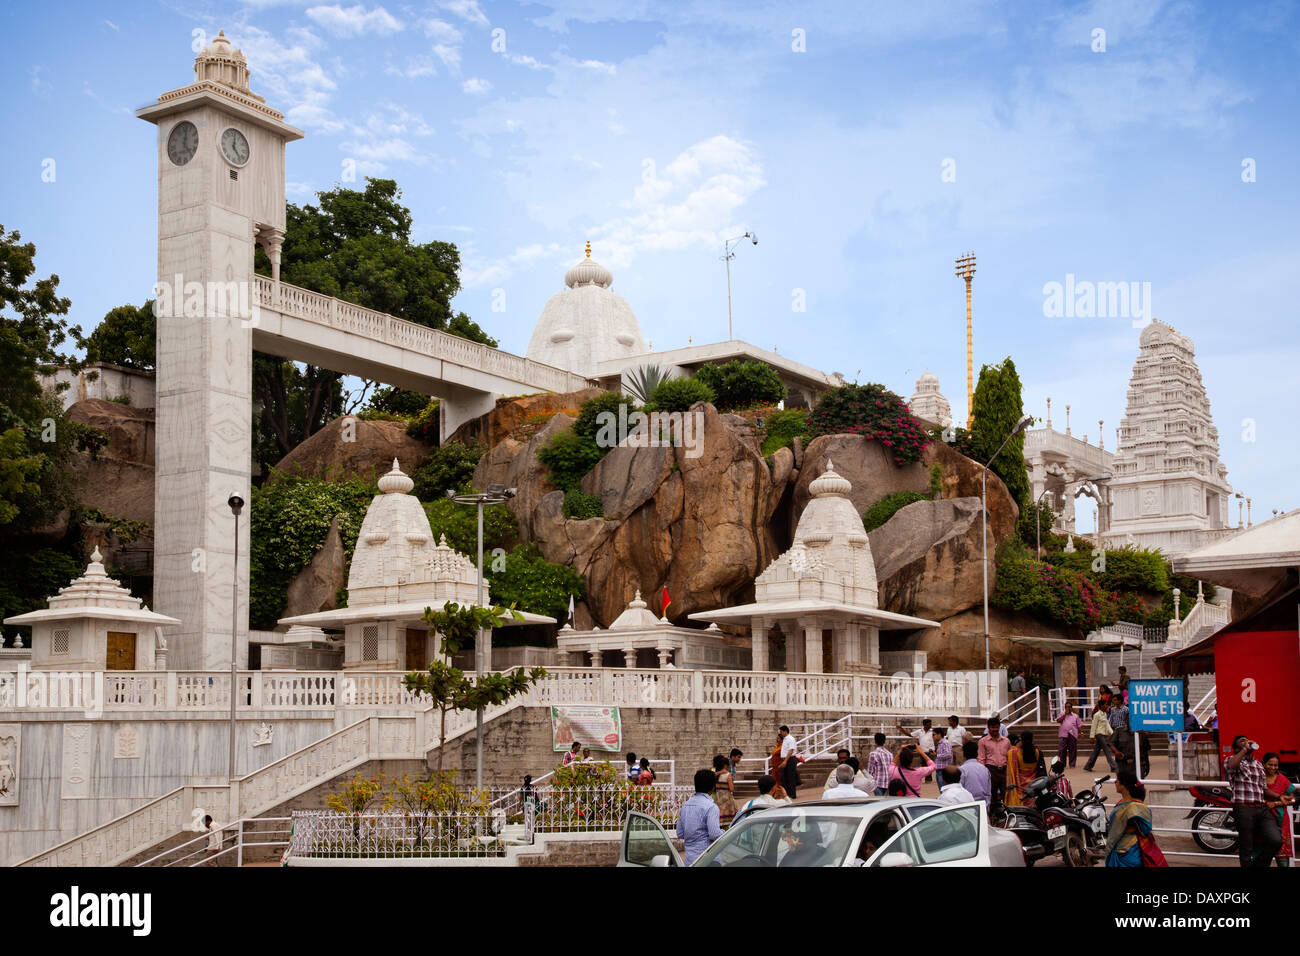 Les touristes dans un temple, Birla Mandir, Hyderabad, Andhra Pradesh, Inde Banque D'Images